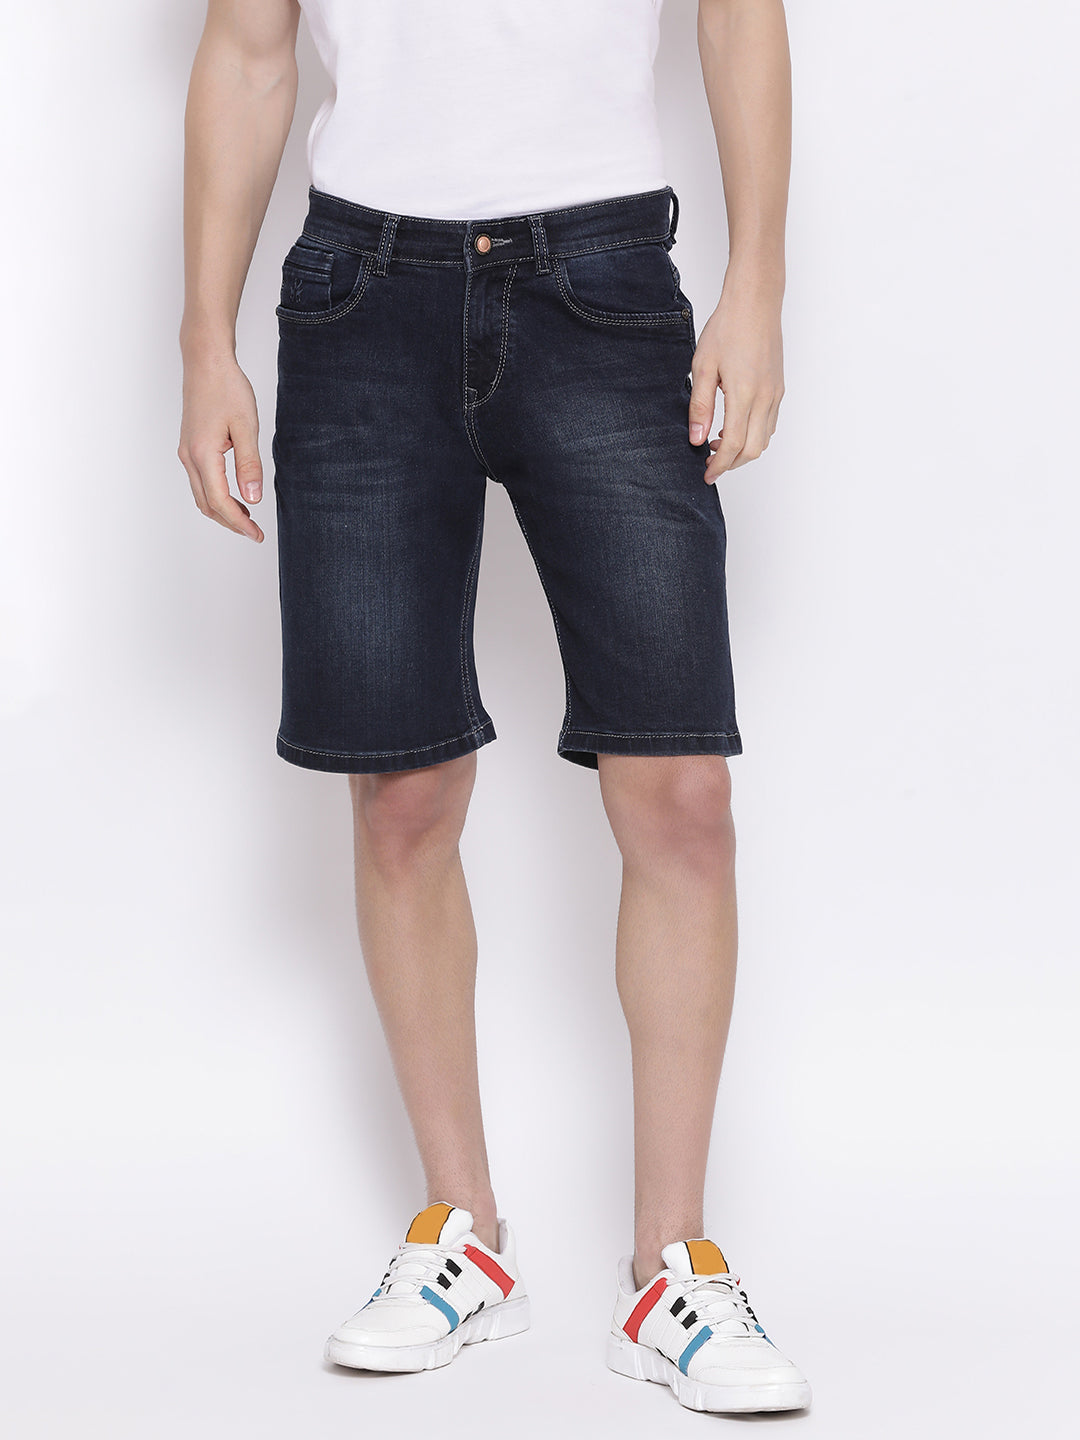 Navy Blue Slim Fit Denim shorts - Men Shorts